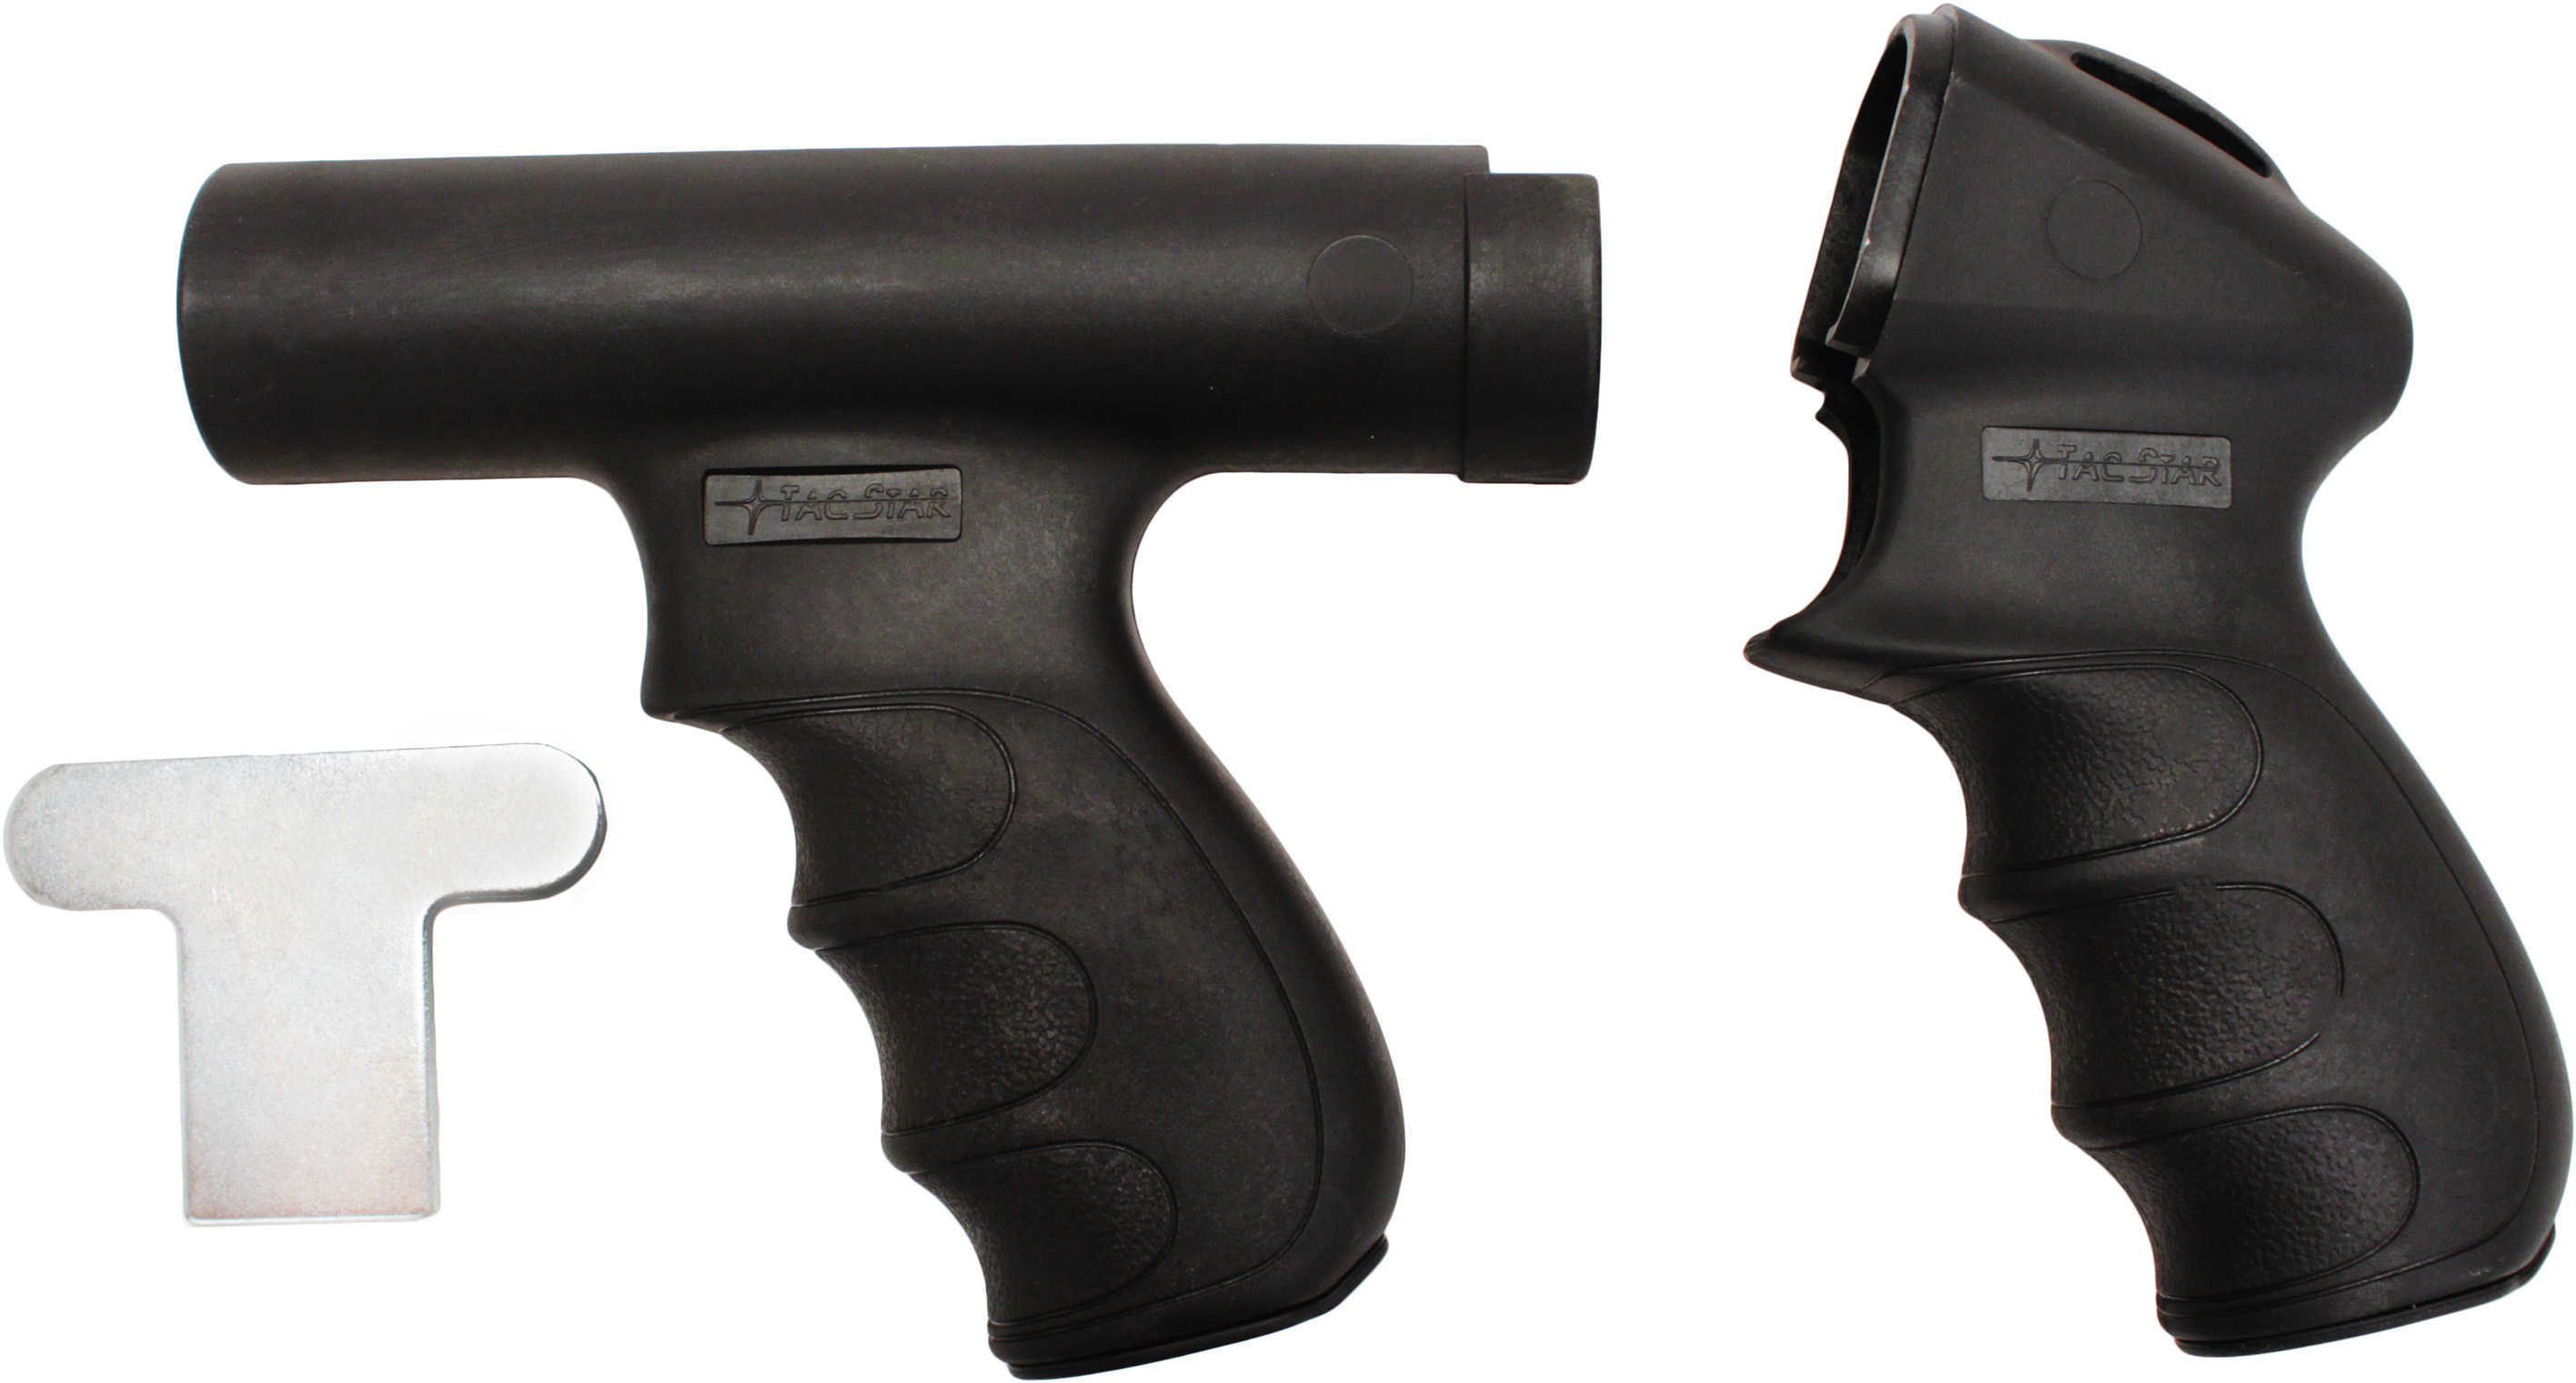 TacStar Front And Rear Shotgun Grip Set, Fits Rem 870, Black Finish 1081149